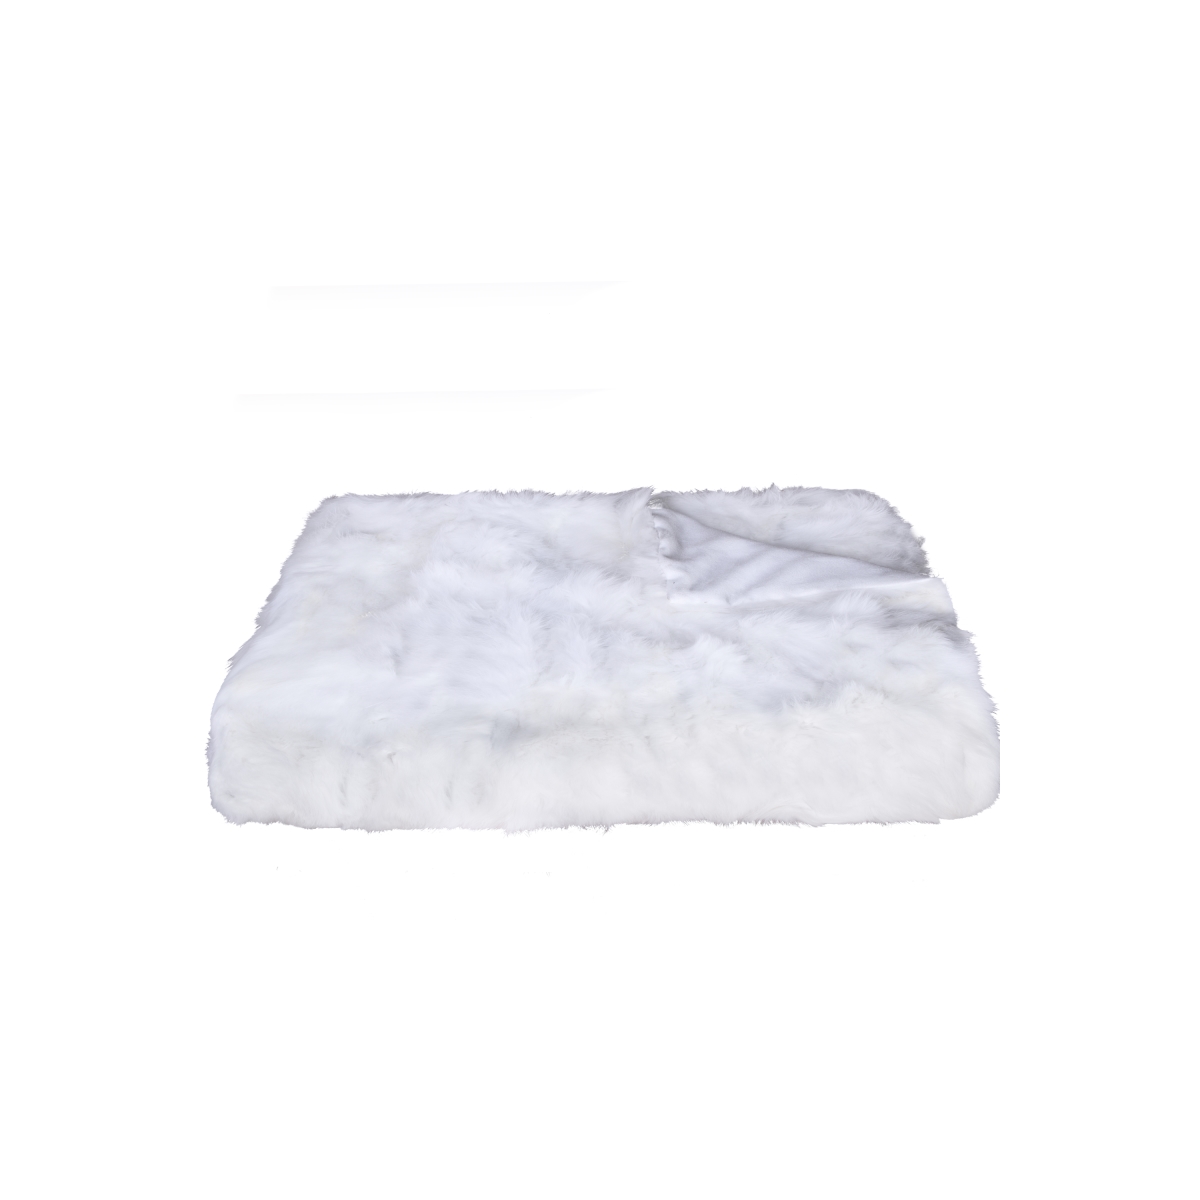 676685046987 50 X 60 In. Rabbit Fur Throw Blanket - White